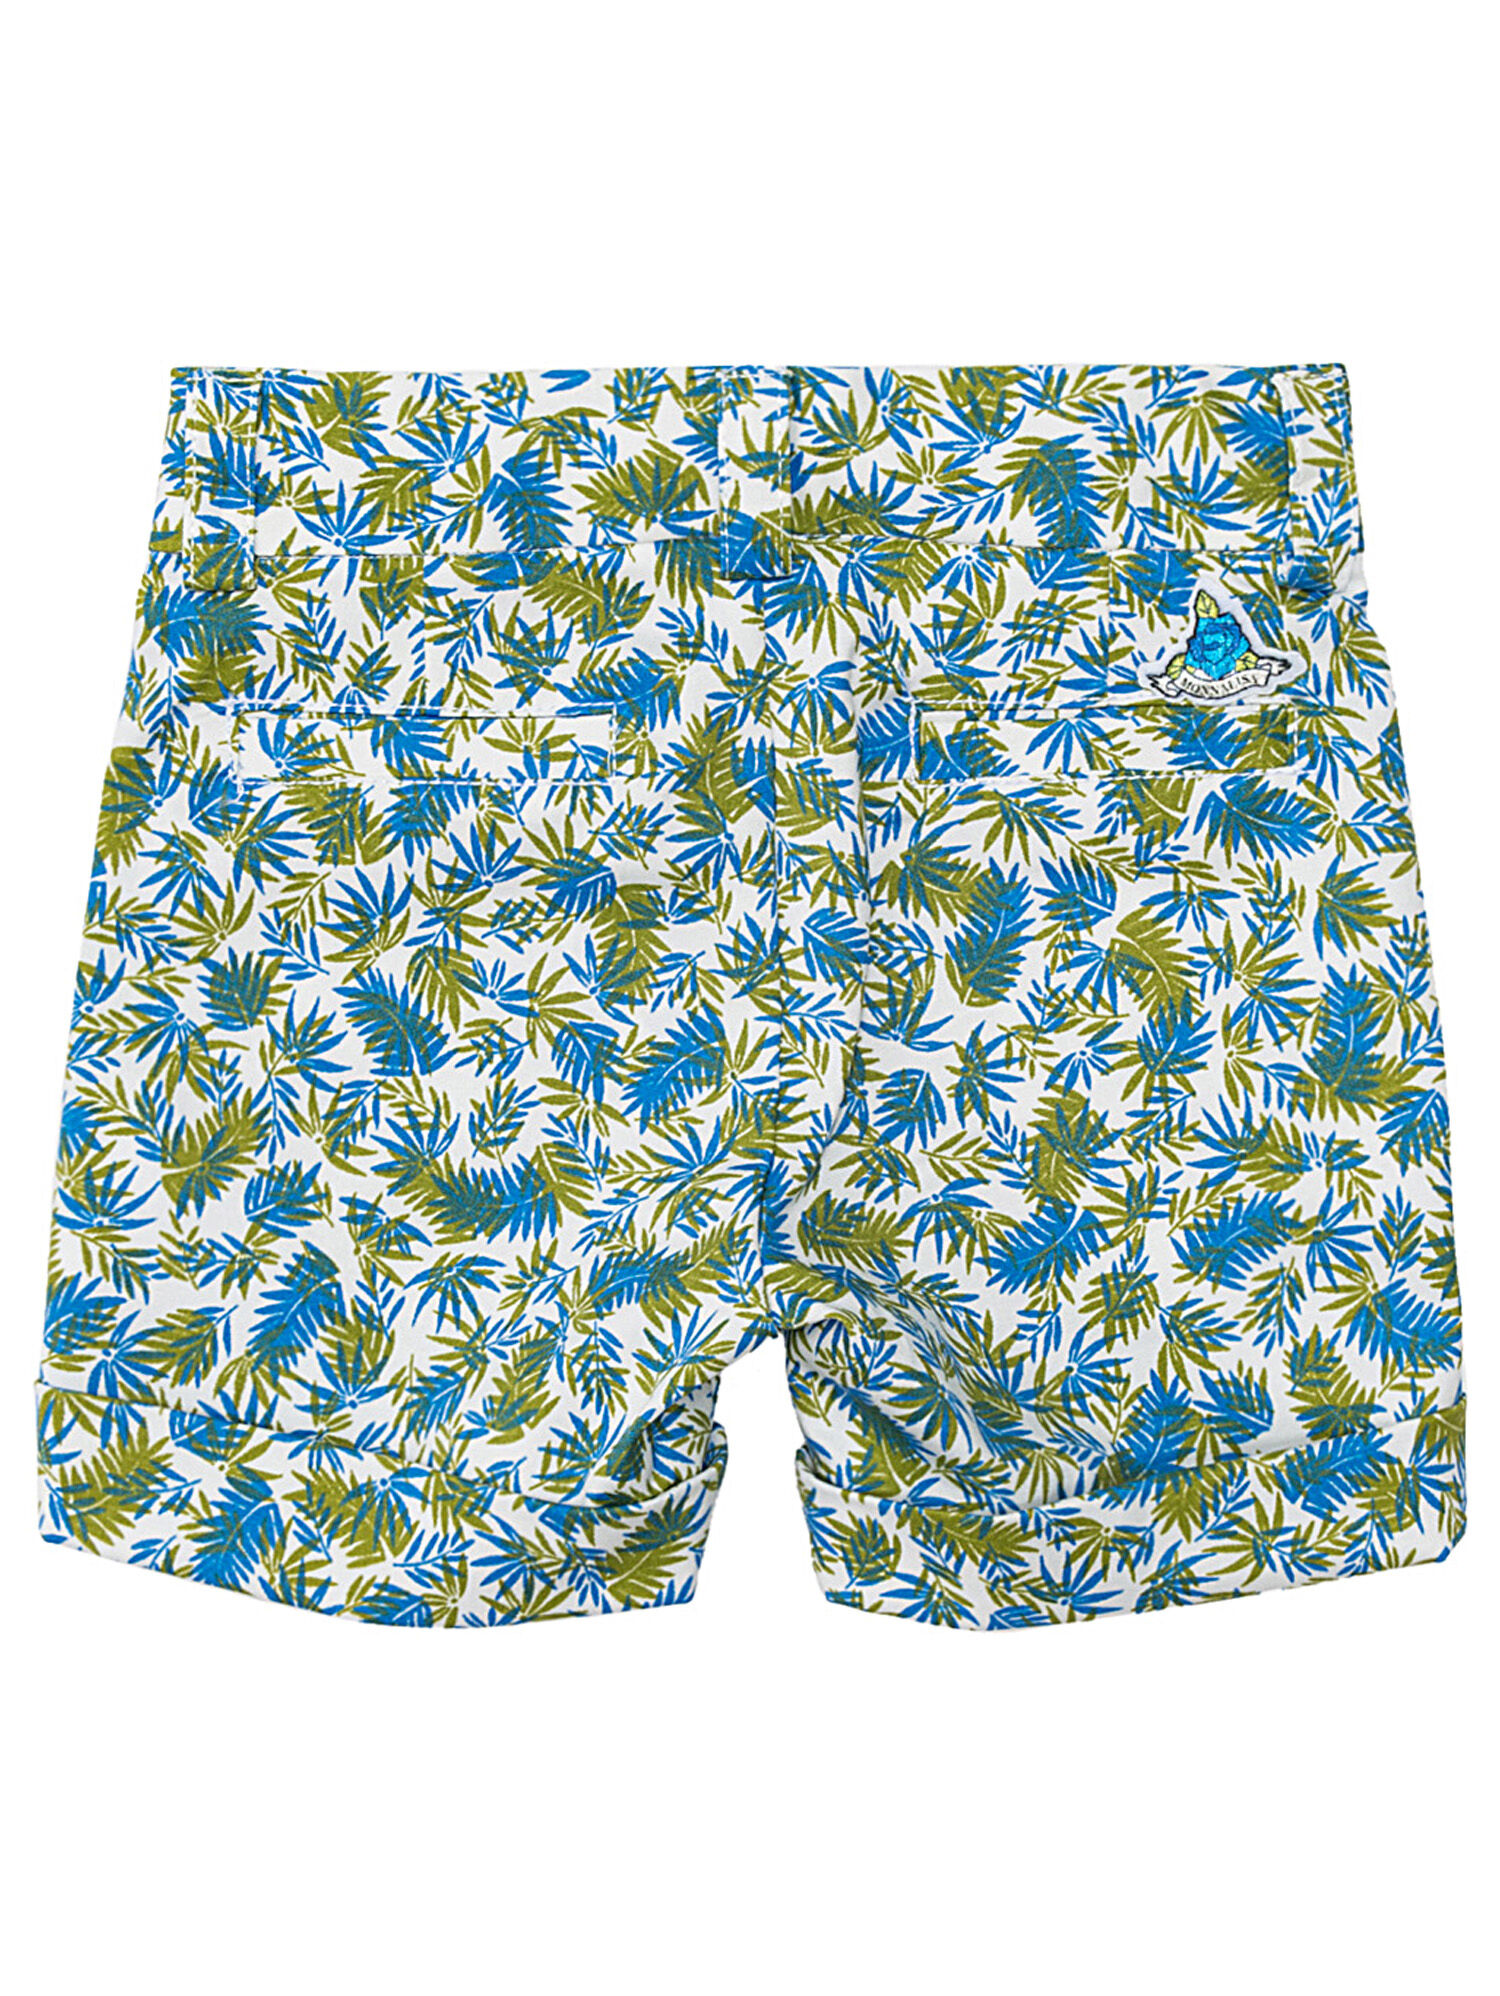 Monnalisa Boys Clothing Shorts Bermudas All-over print gabardine bermudas 